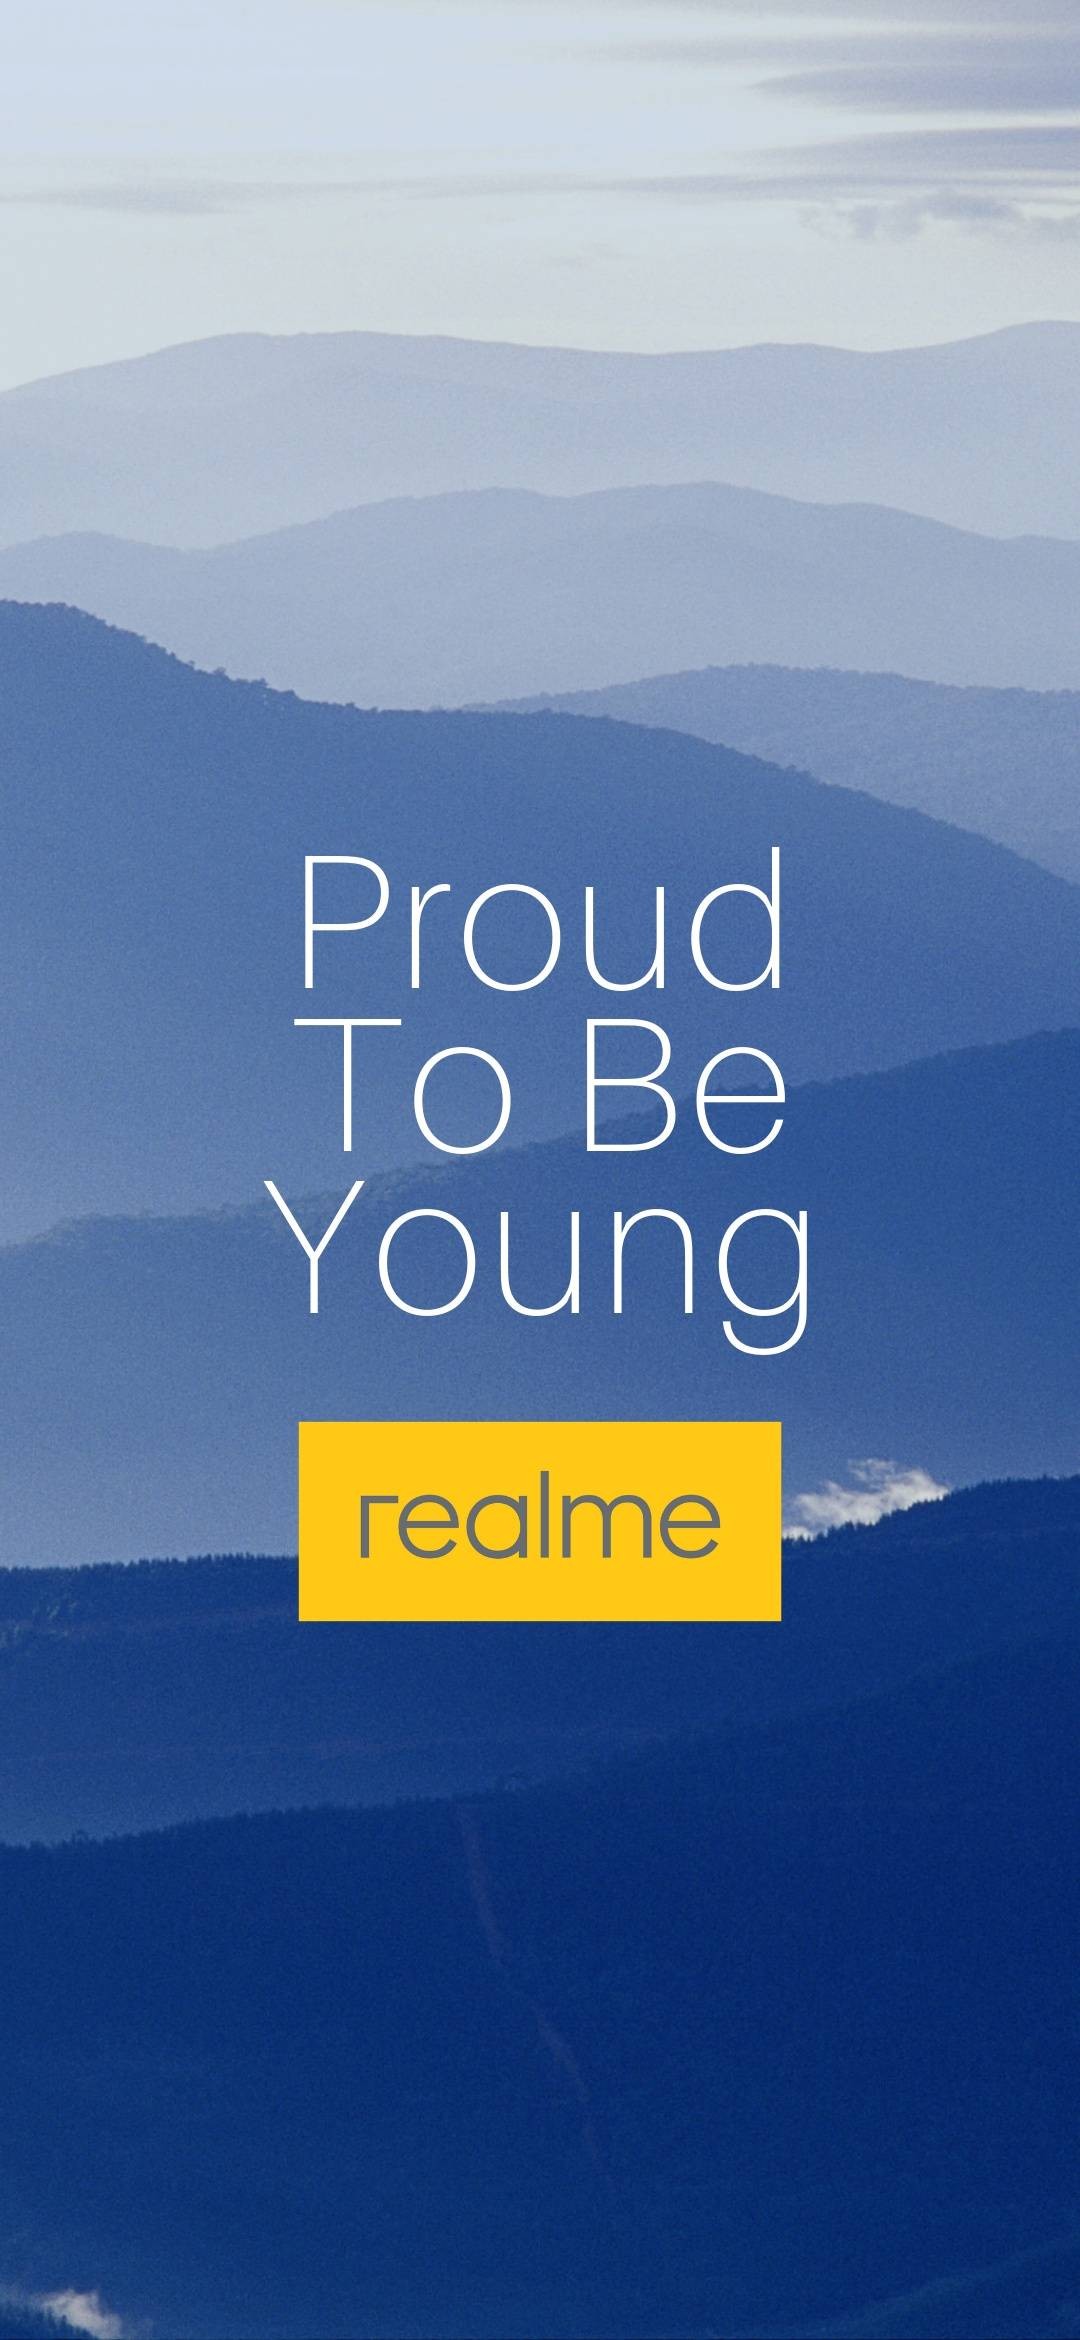 Realme Logo Wallpapers